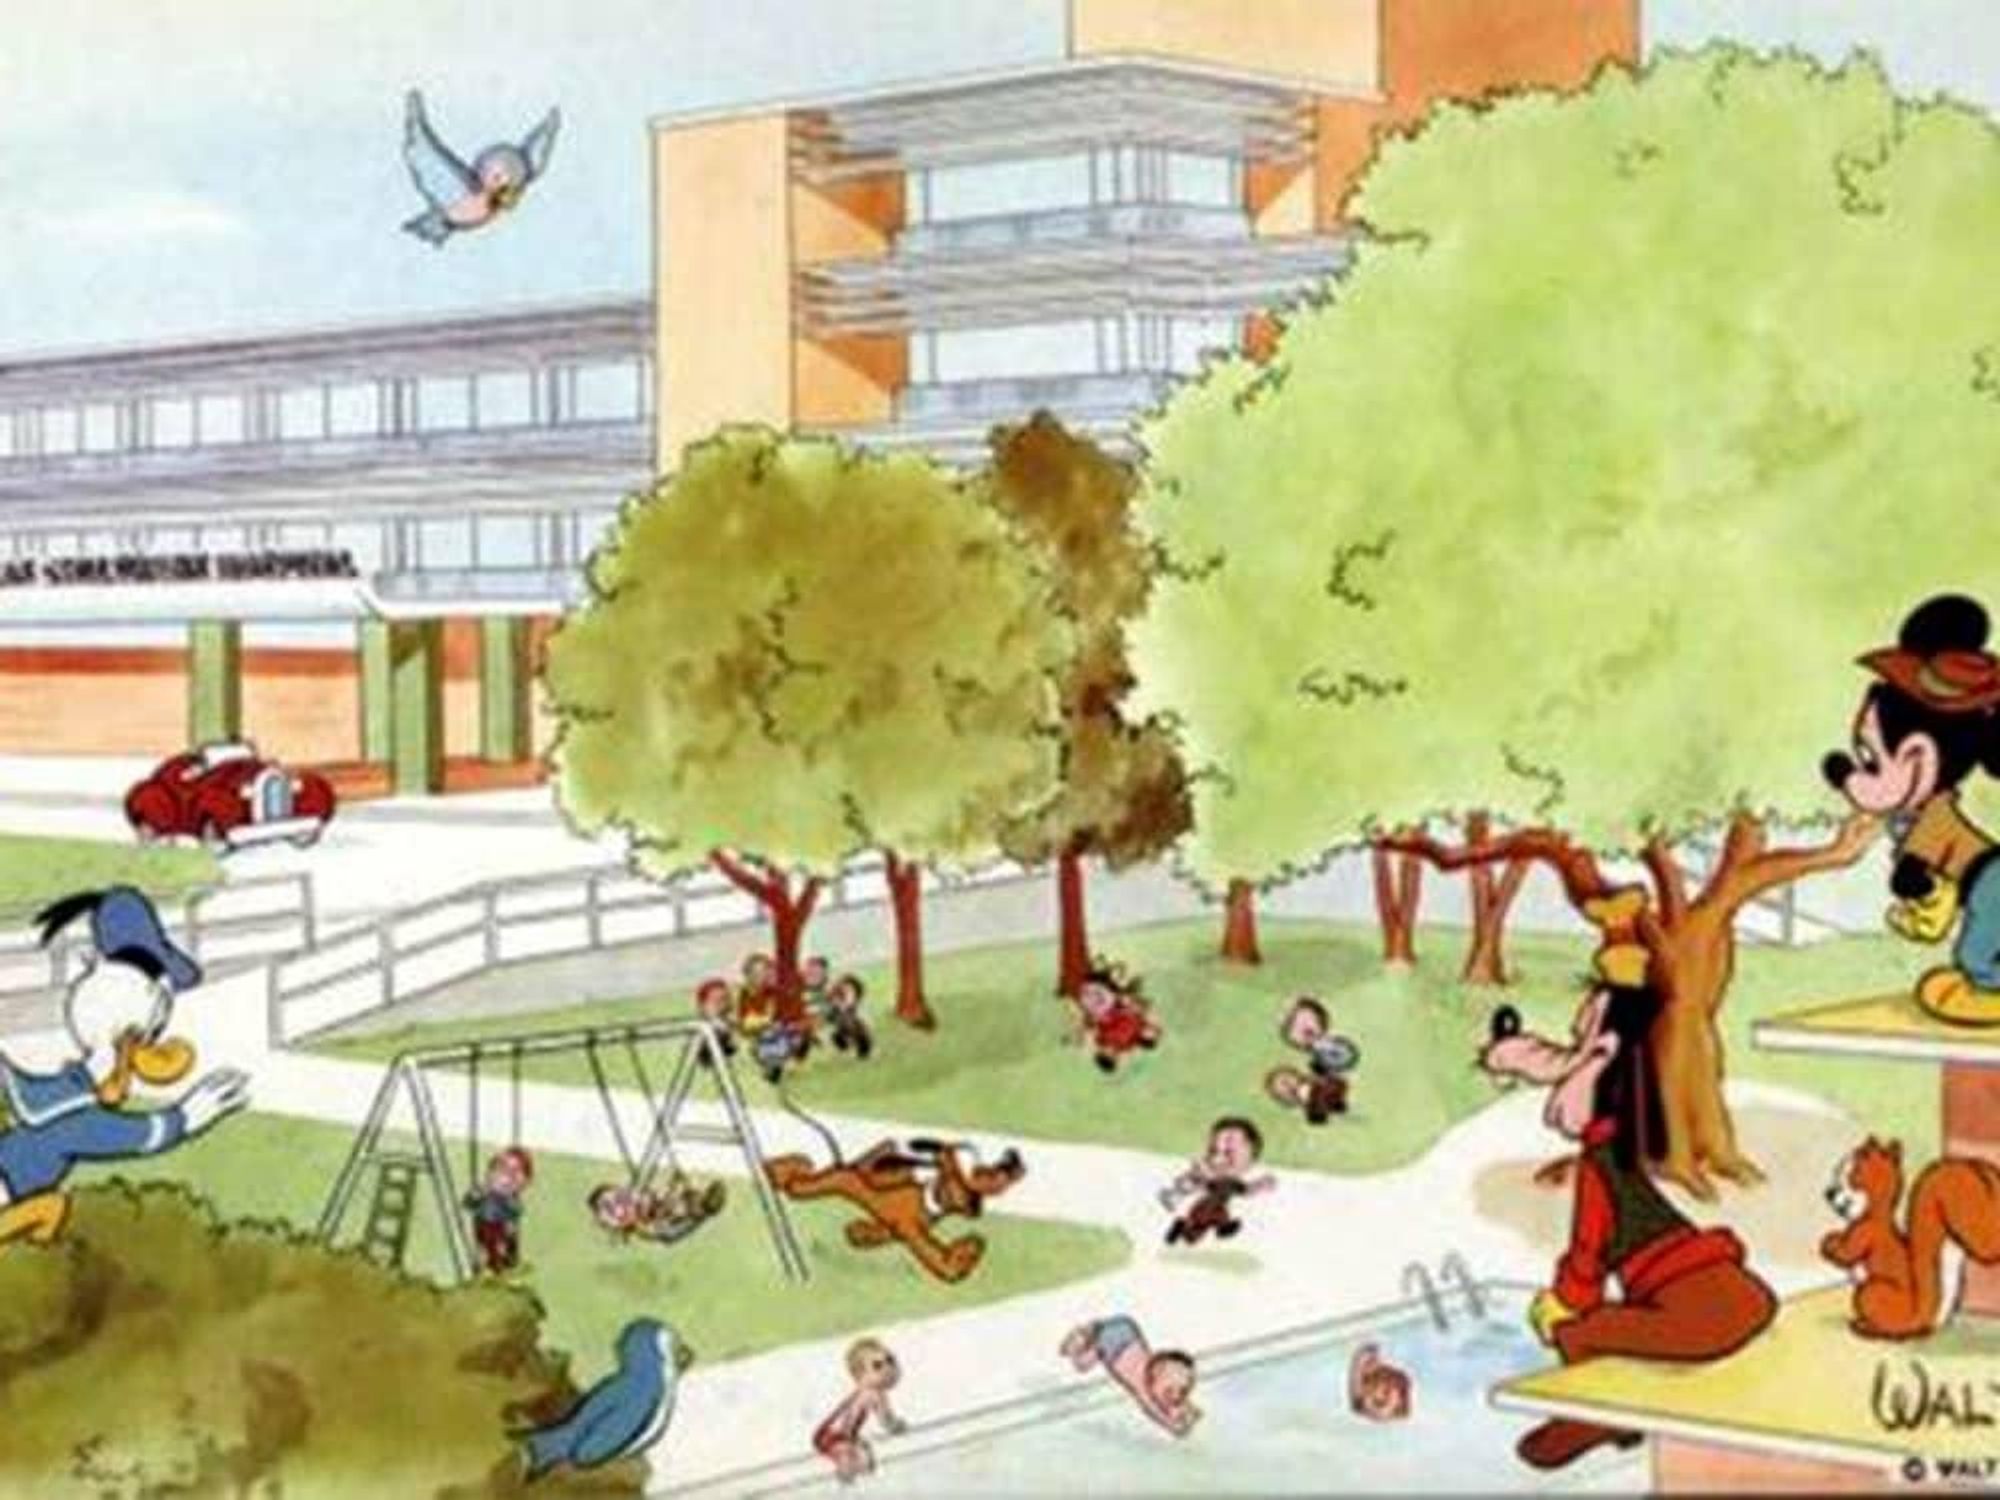 Disney image of Texas Children's Hospital